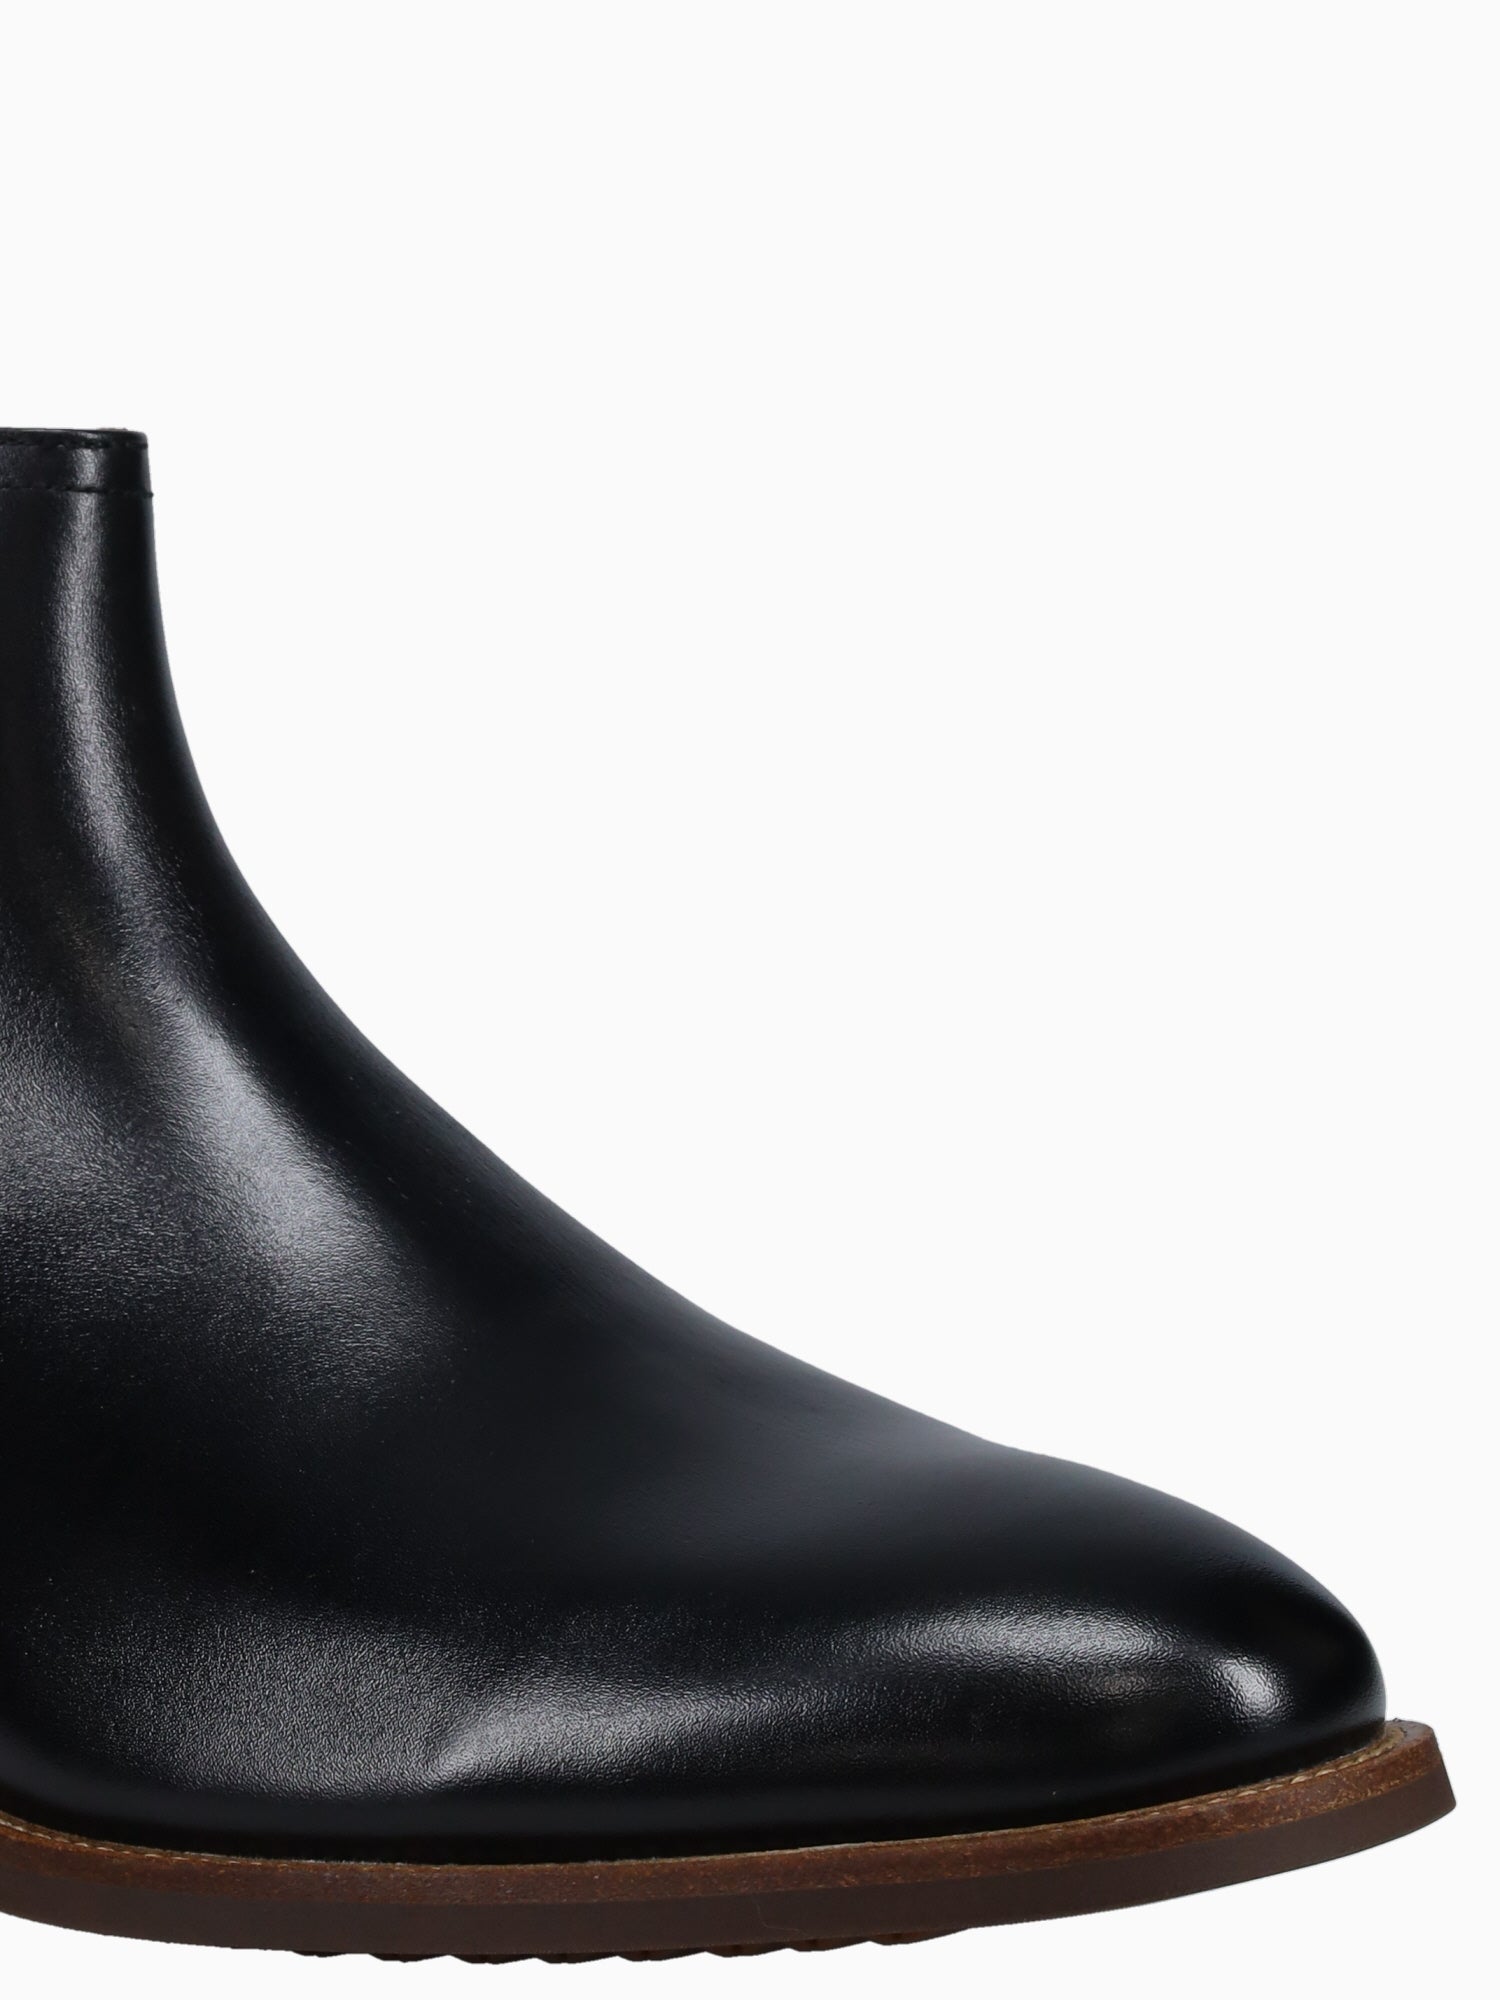 Rucci Plain Toe Gore Boot Black Leather Black / 7 / M